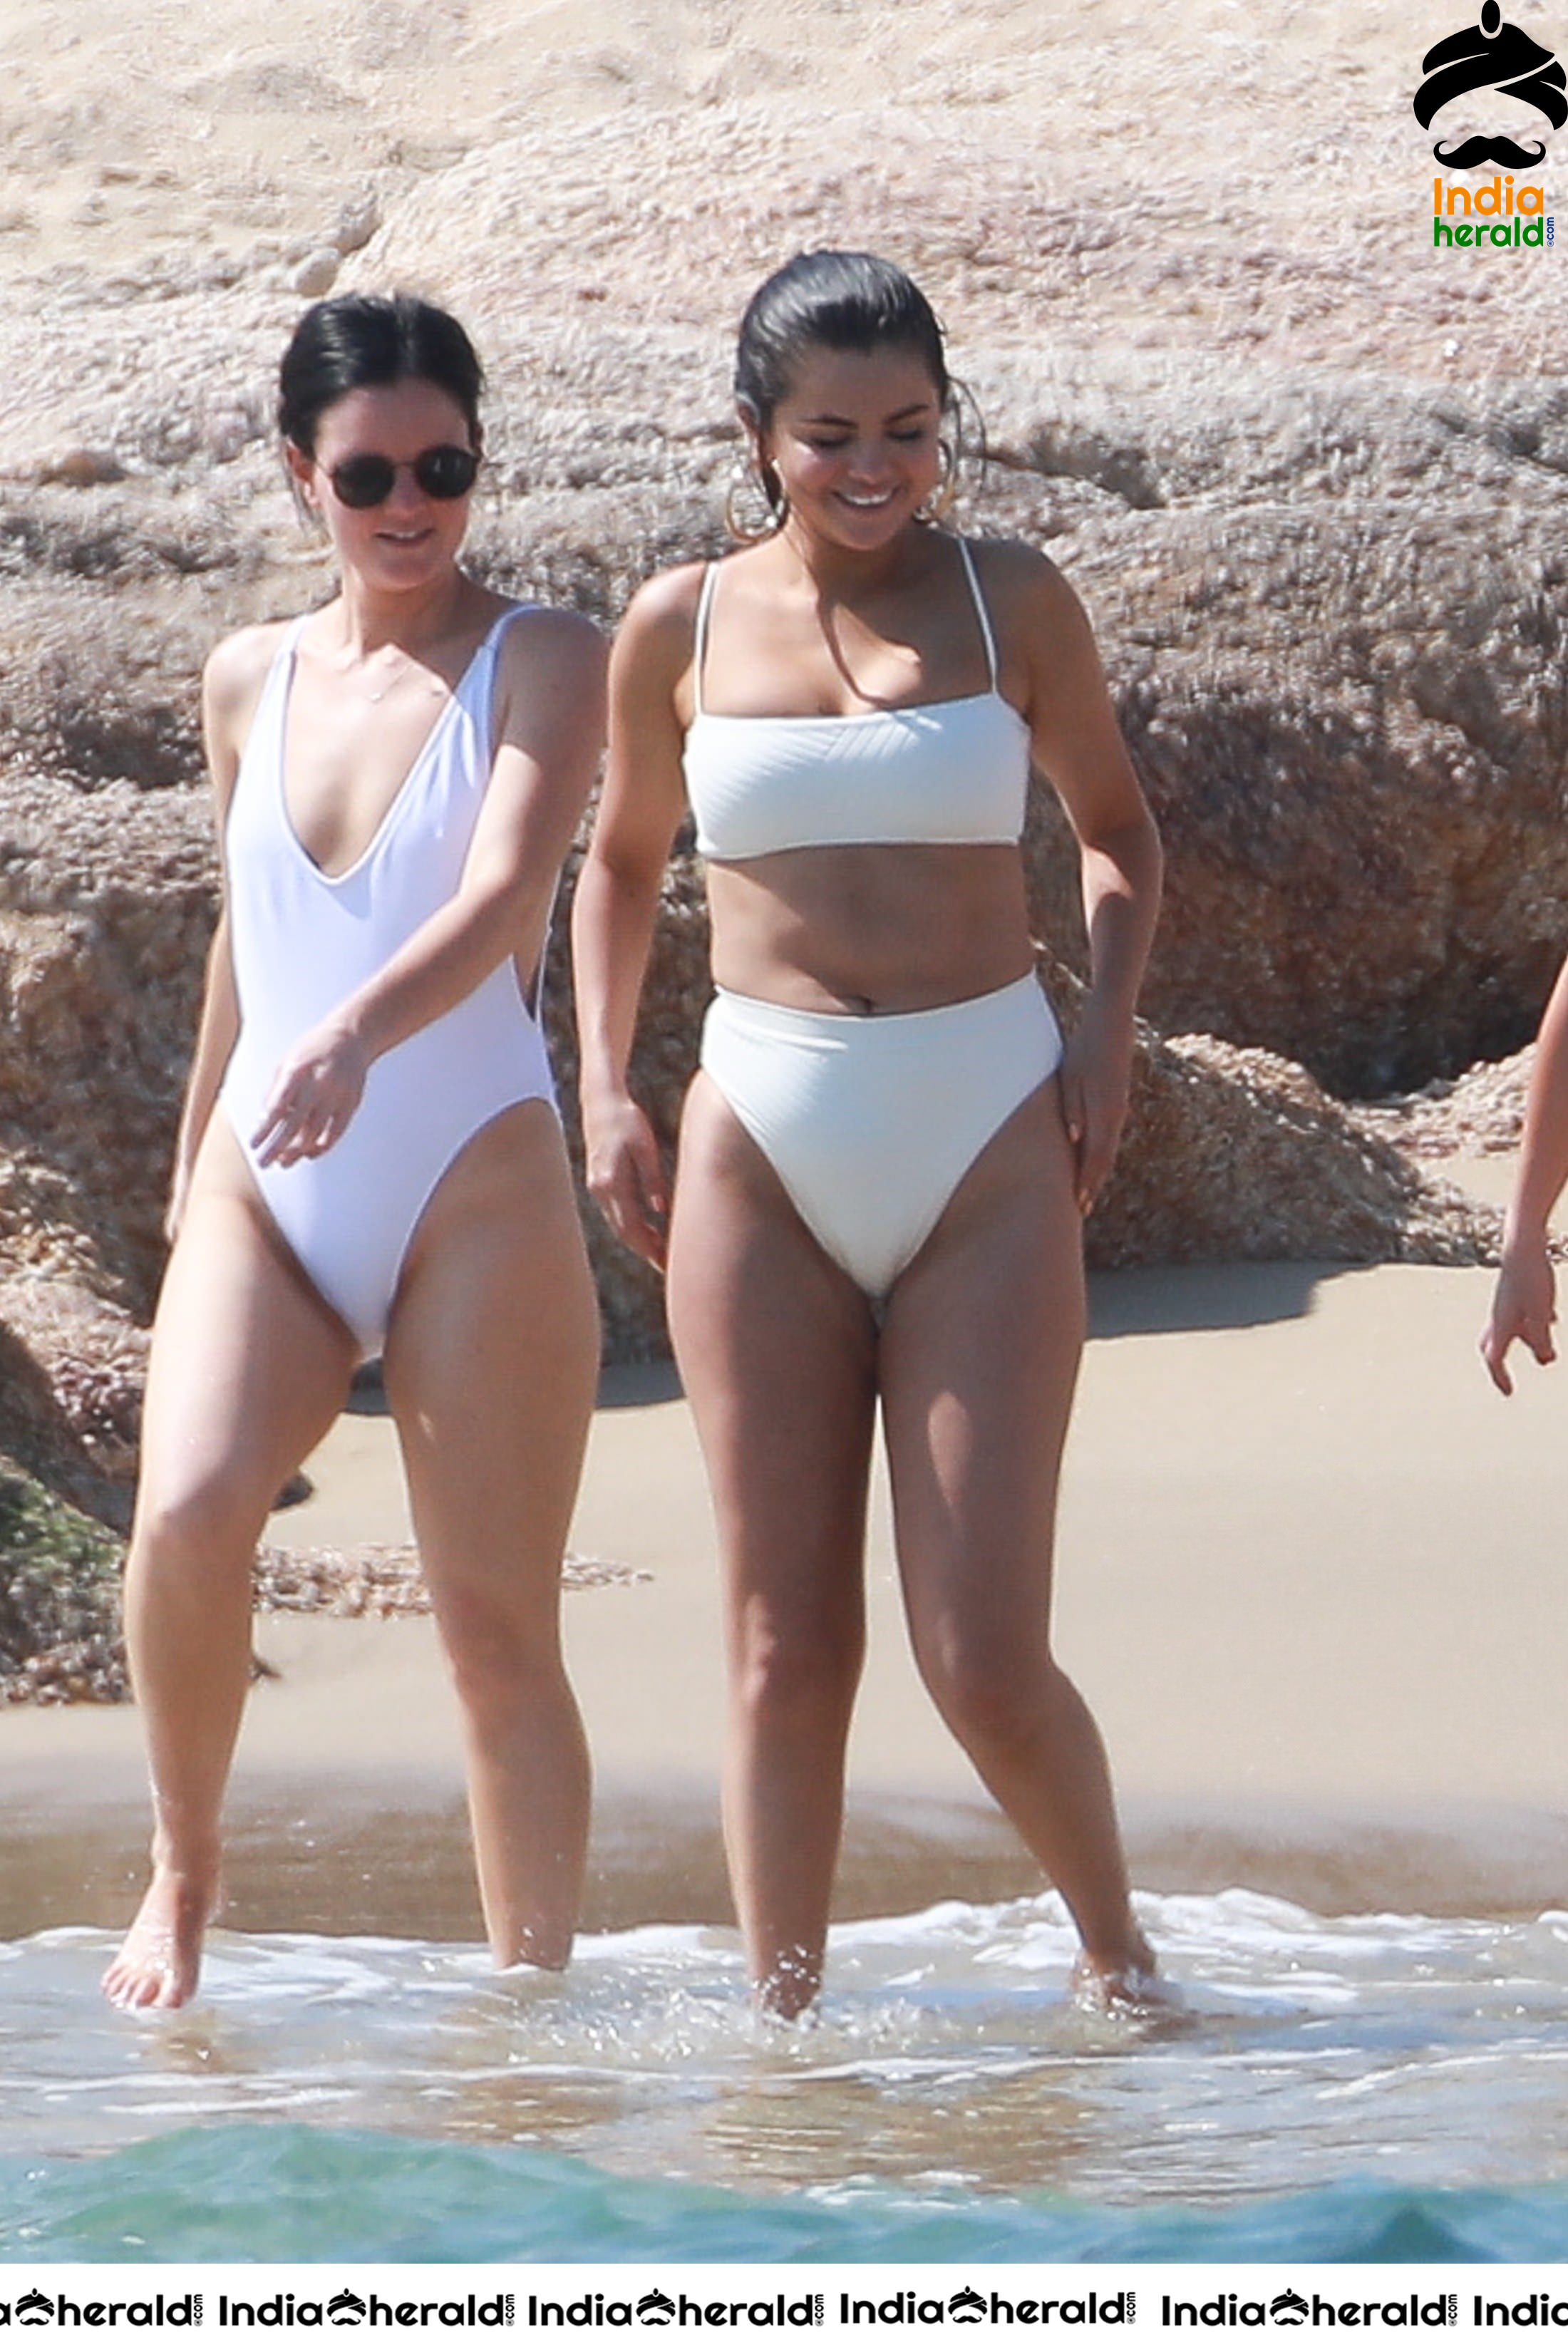 Selena Gomez Wearing A Bikini With Friends In A Beach Set 4